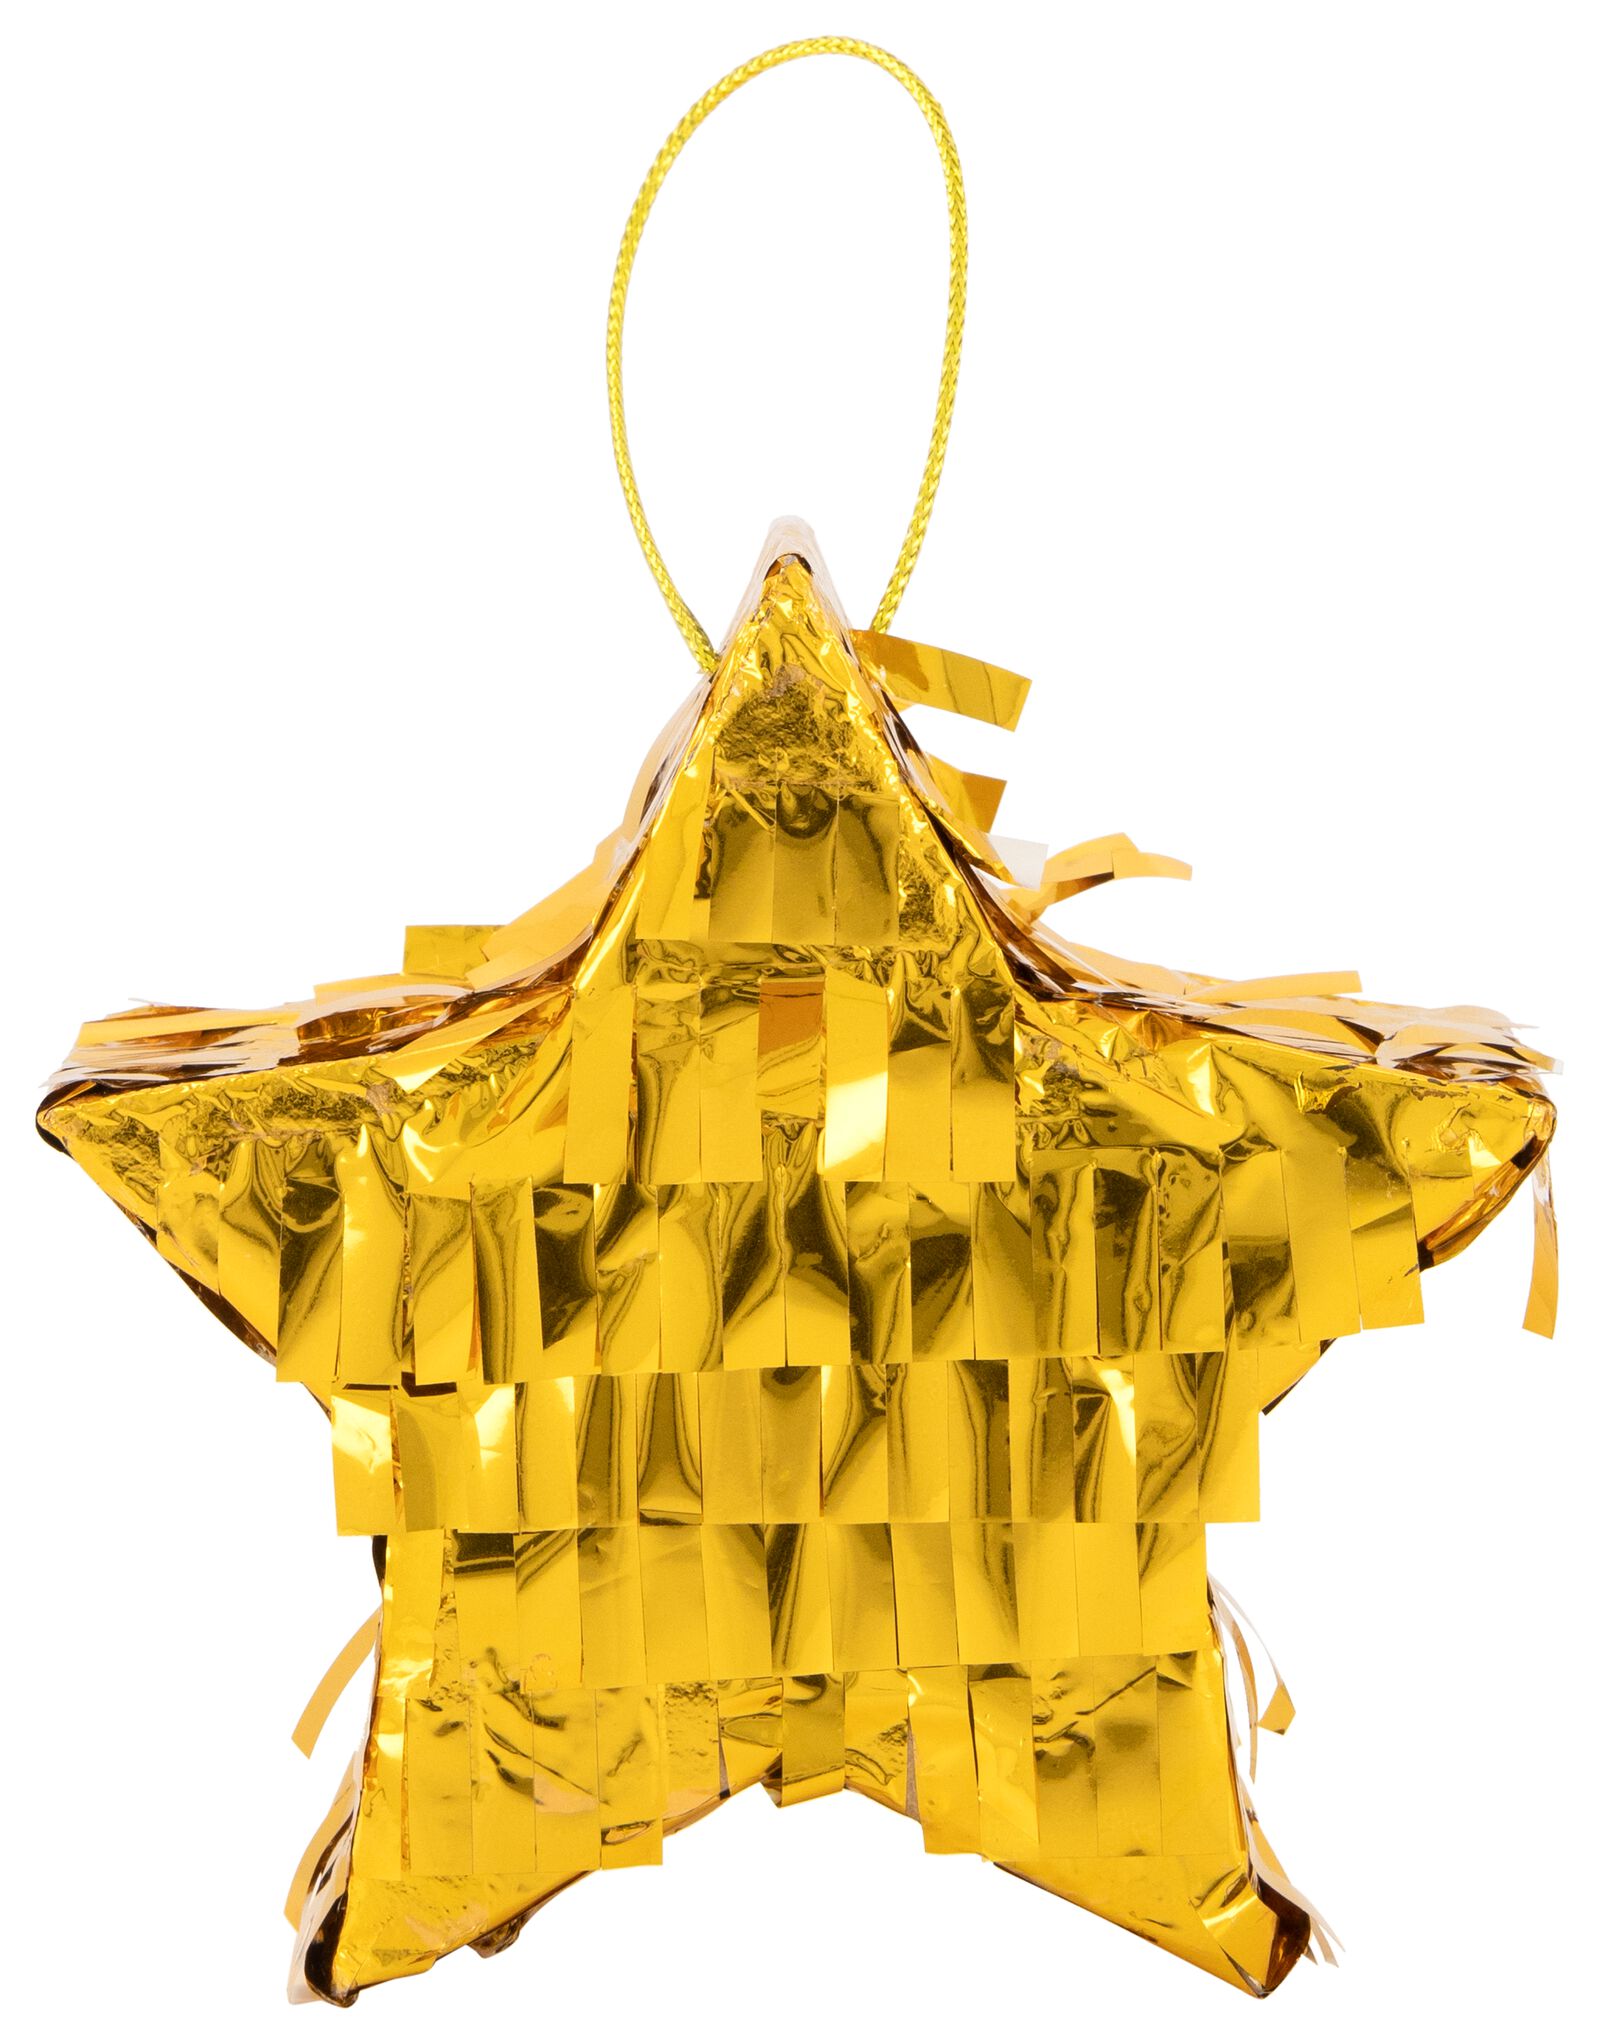 Mini-Piñata, goldener Stern, 12 x 12 x 4 cm - 14200721 - HEMA